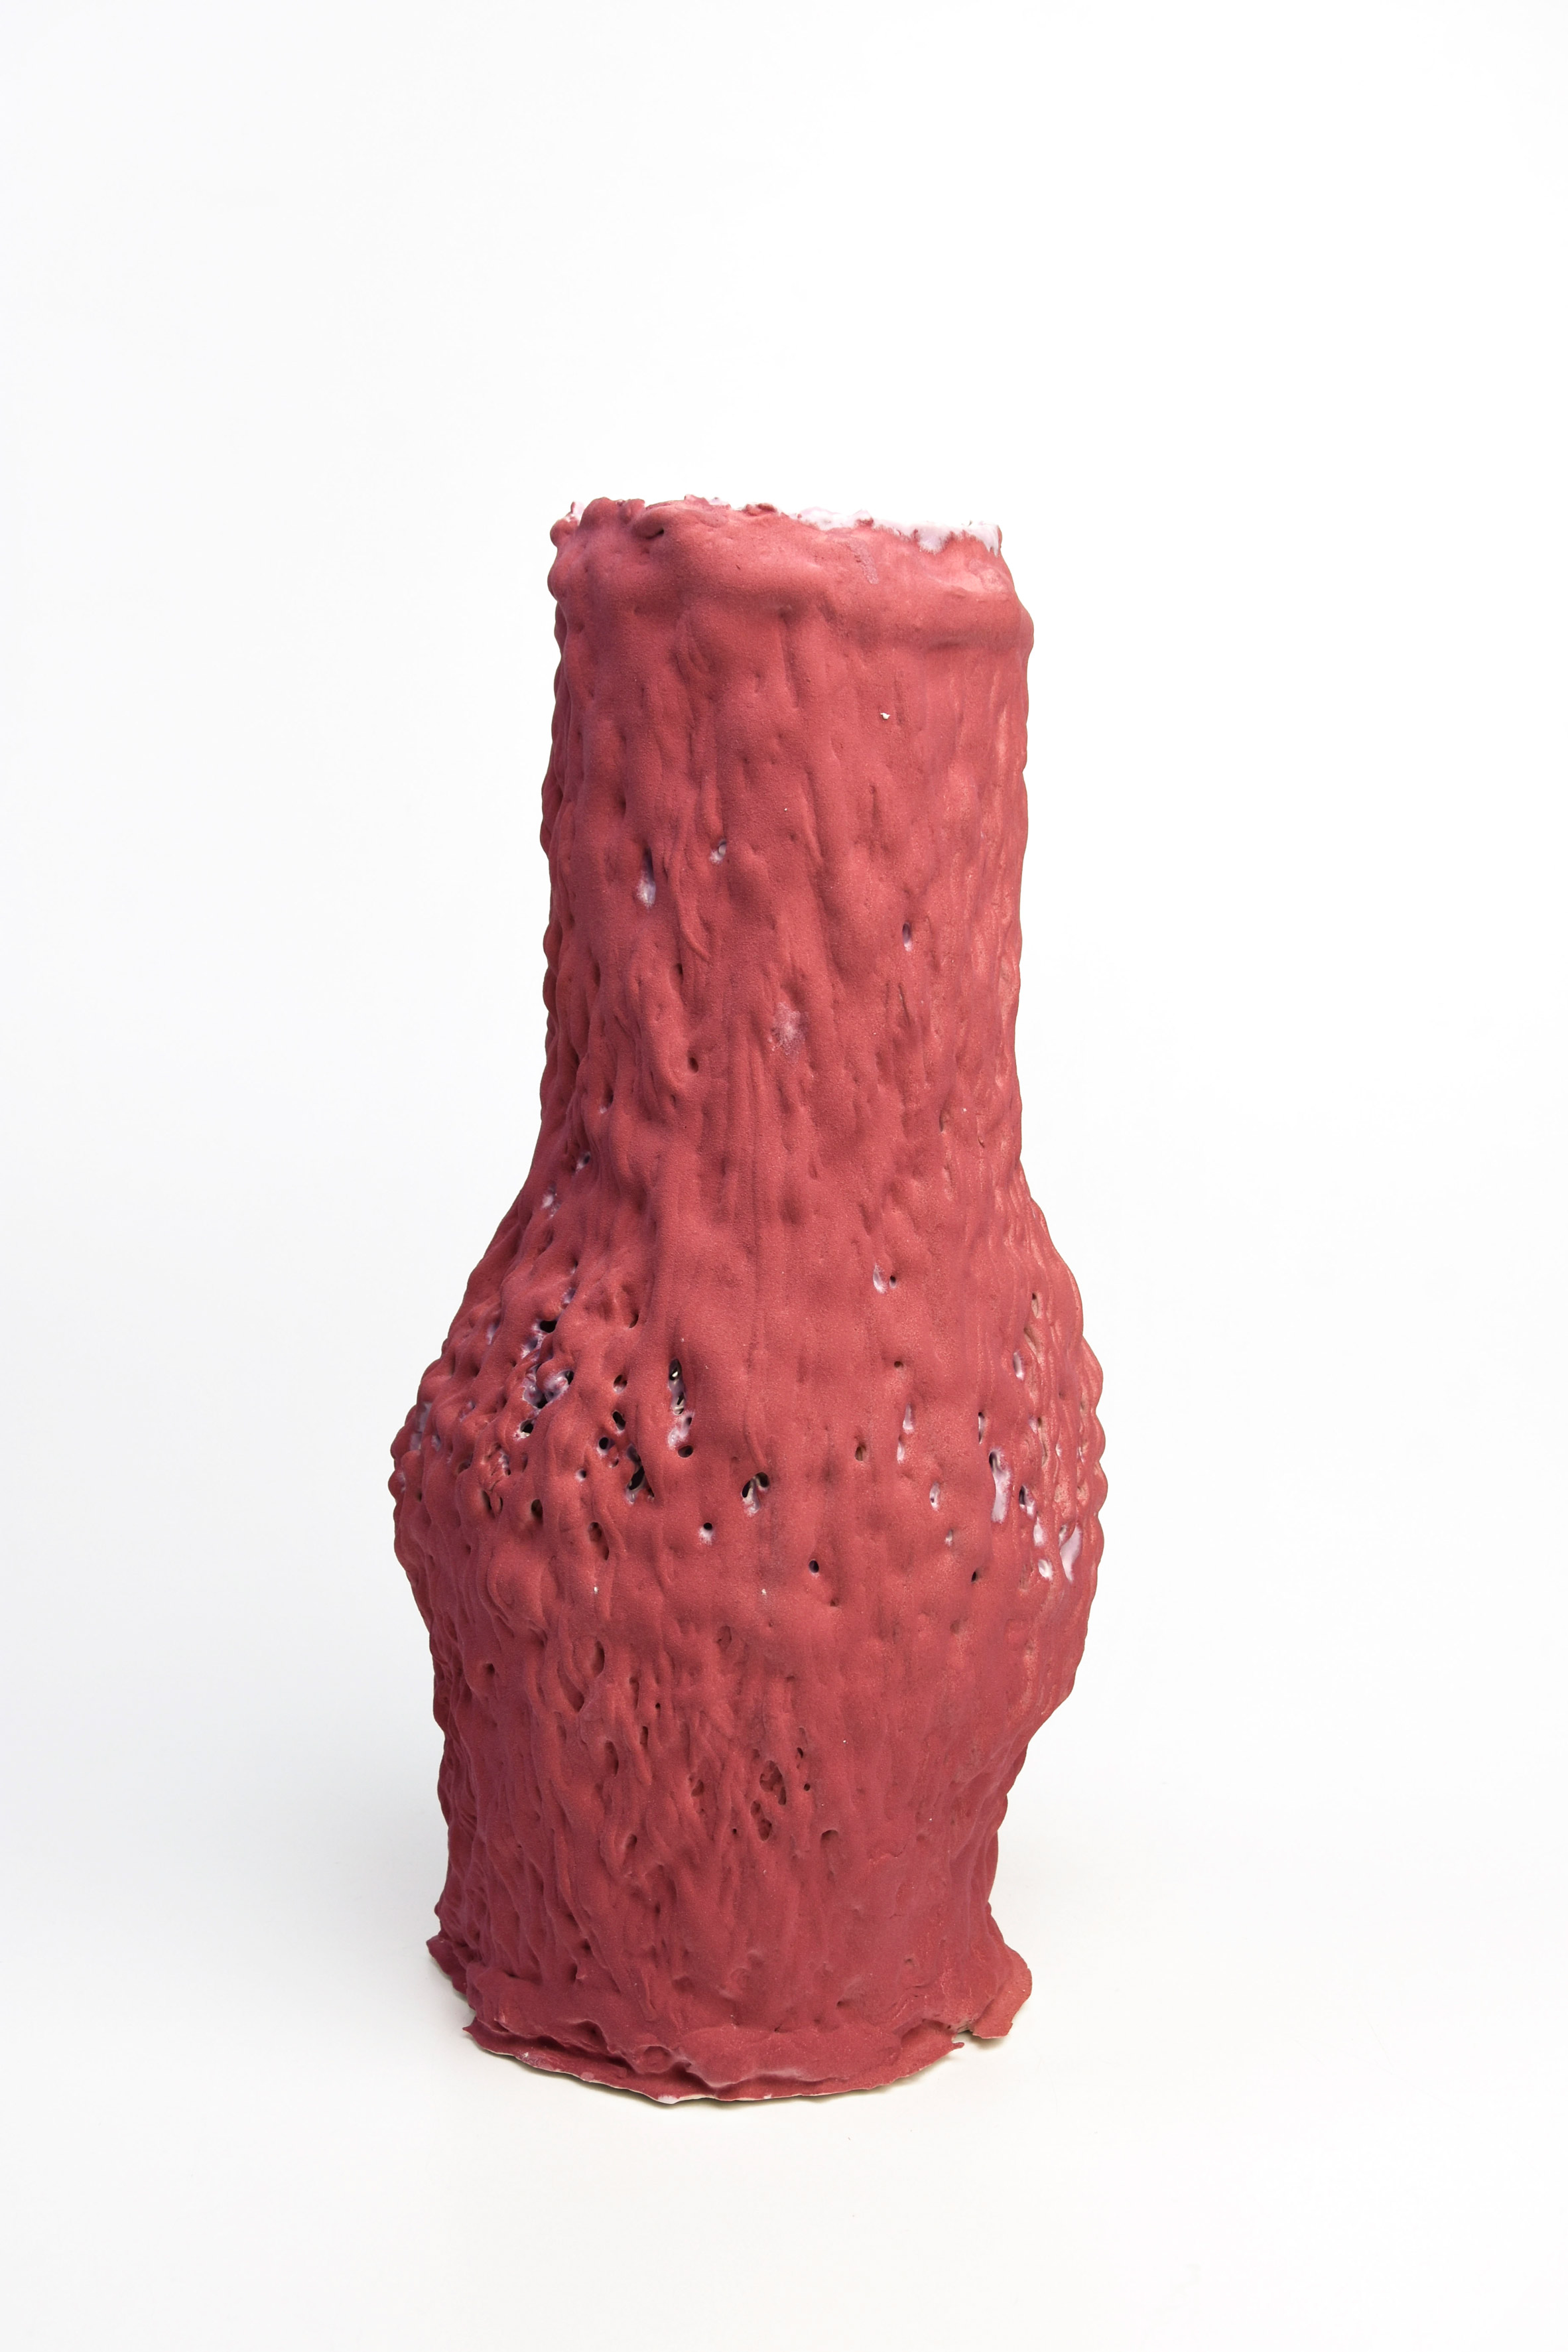 Design Academy Eindhoven graduate Erika Emeren uses spit-cake technique to make ceramic vases